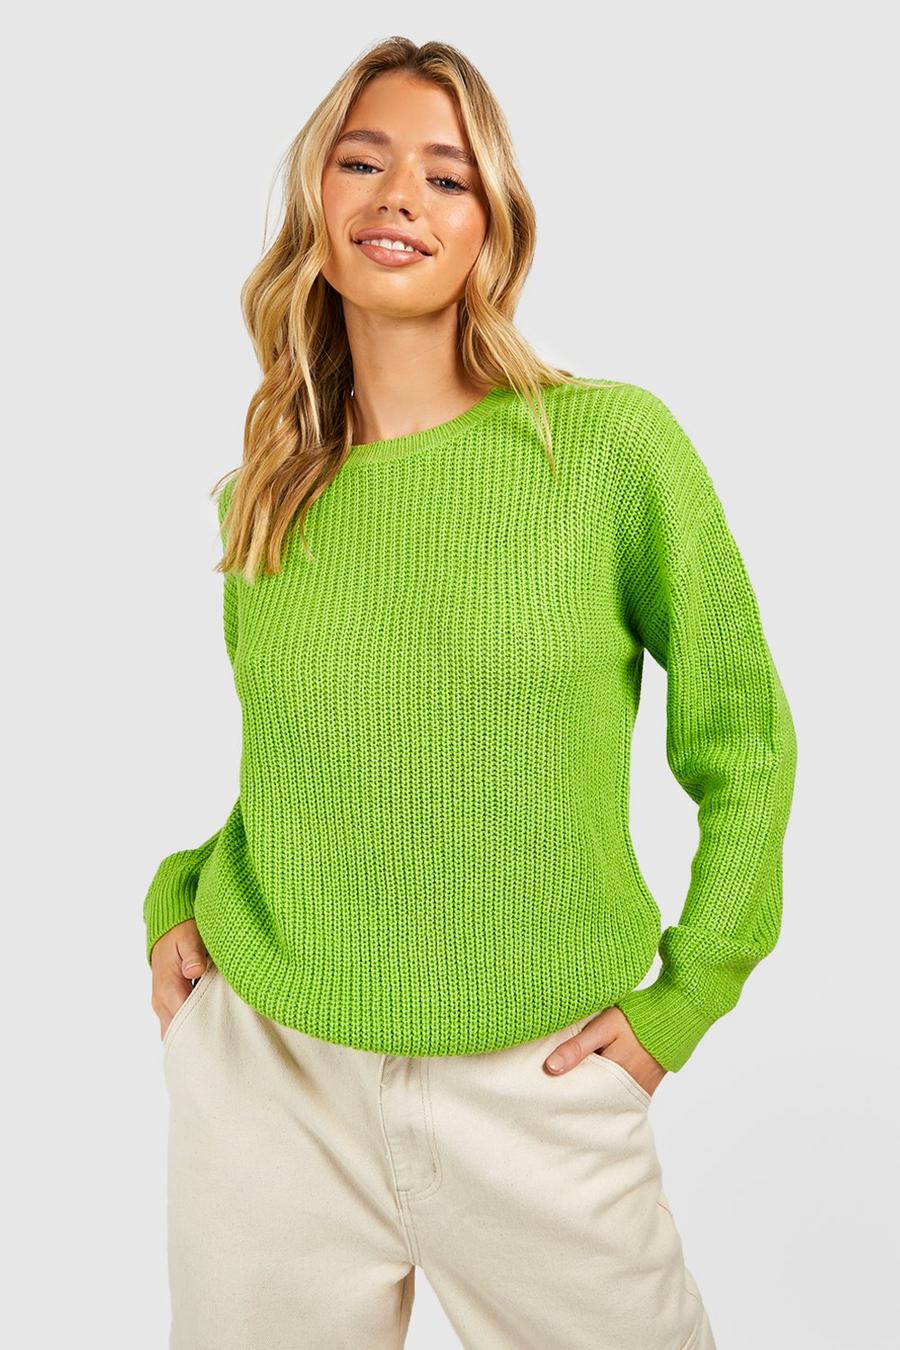 Apple green Crew Neck Sweater